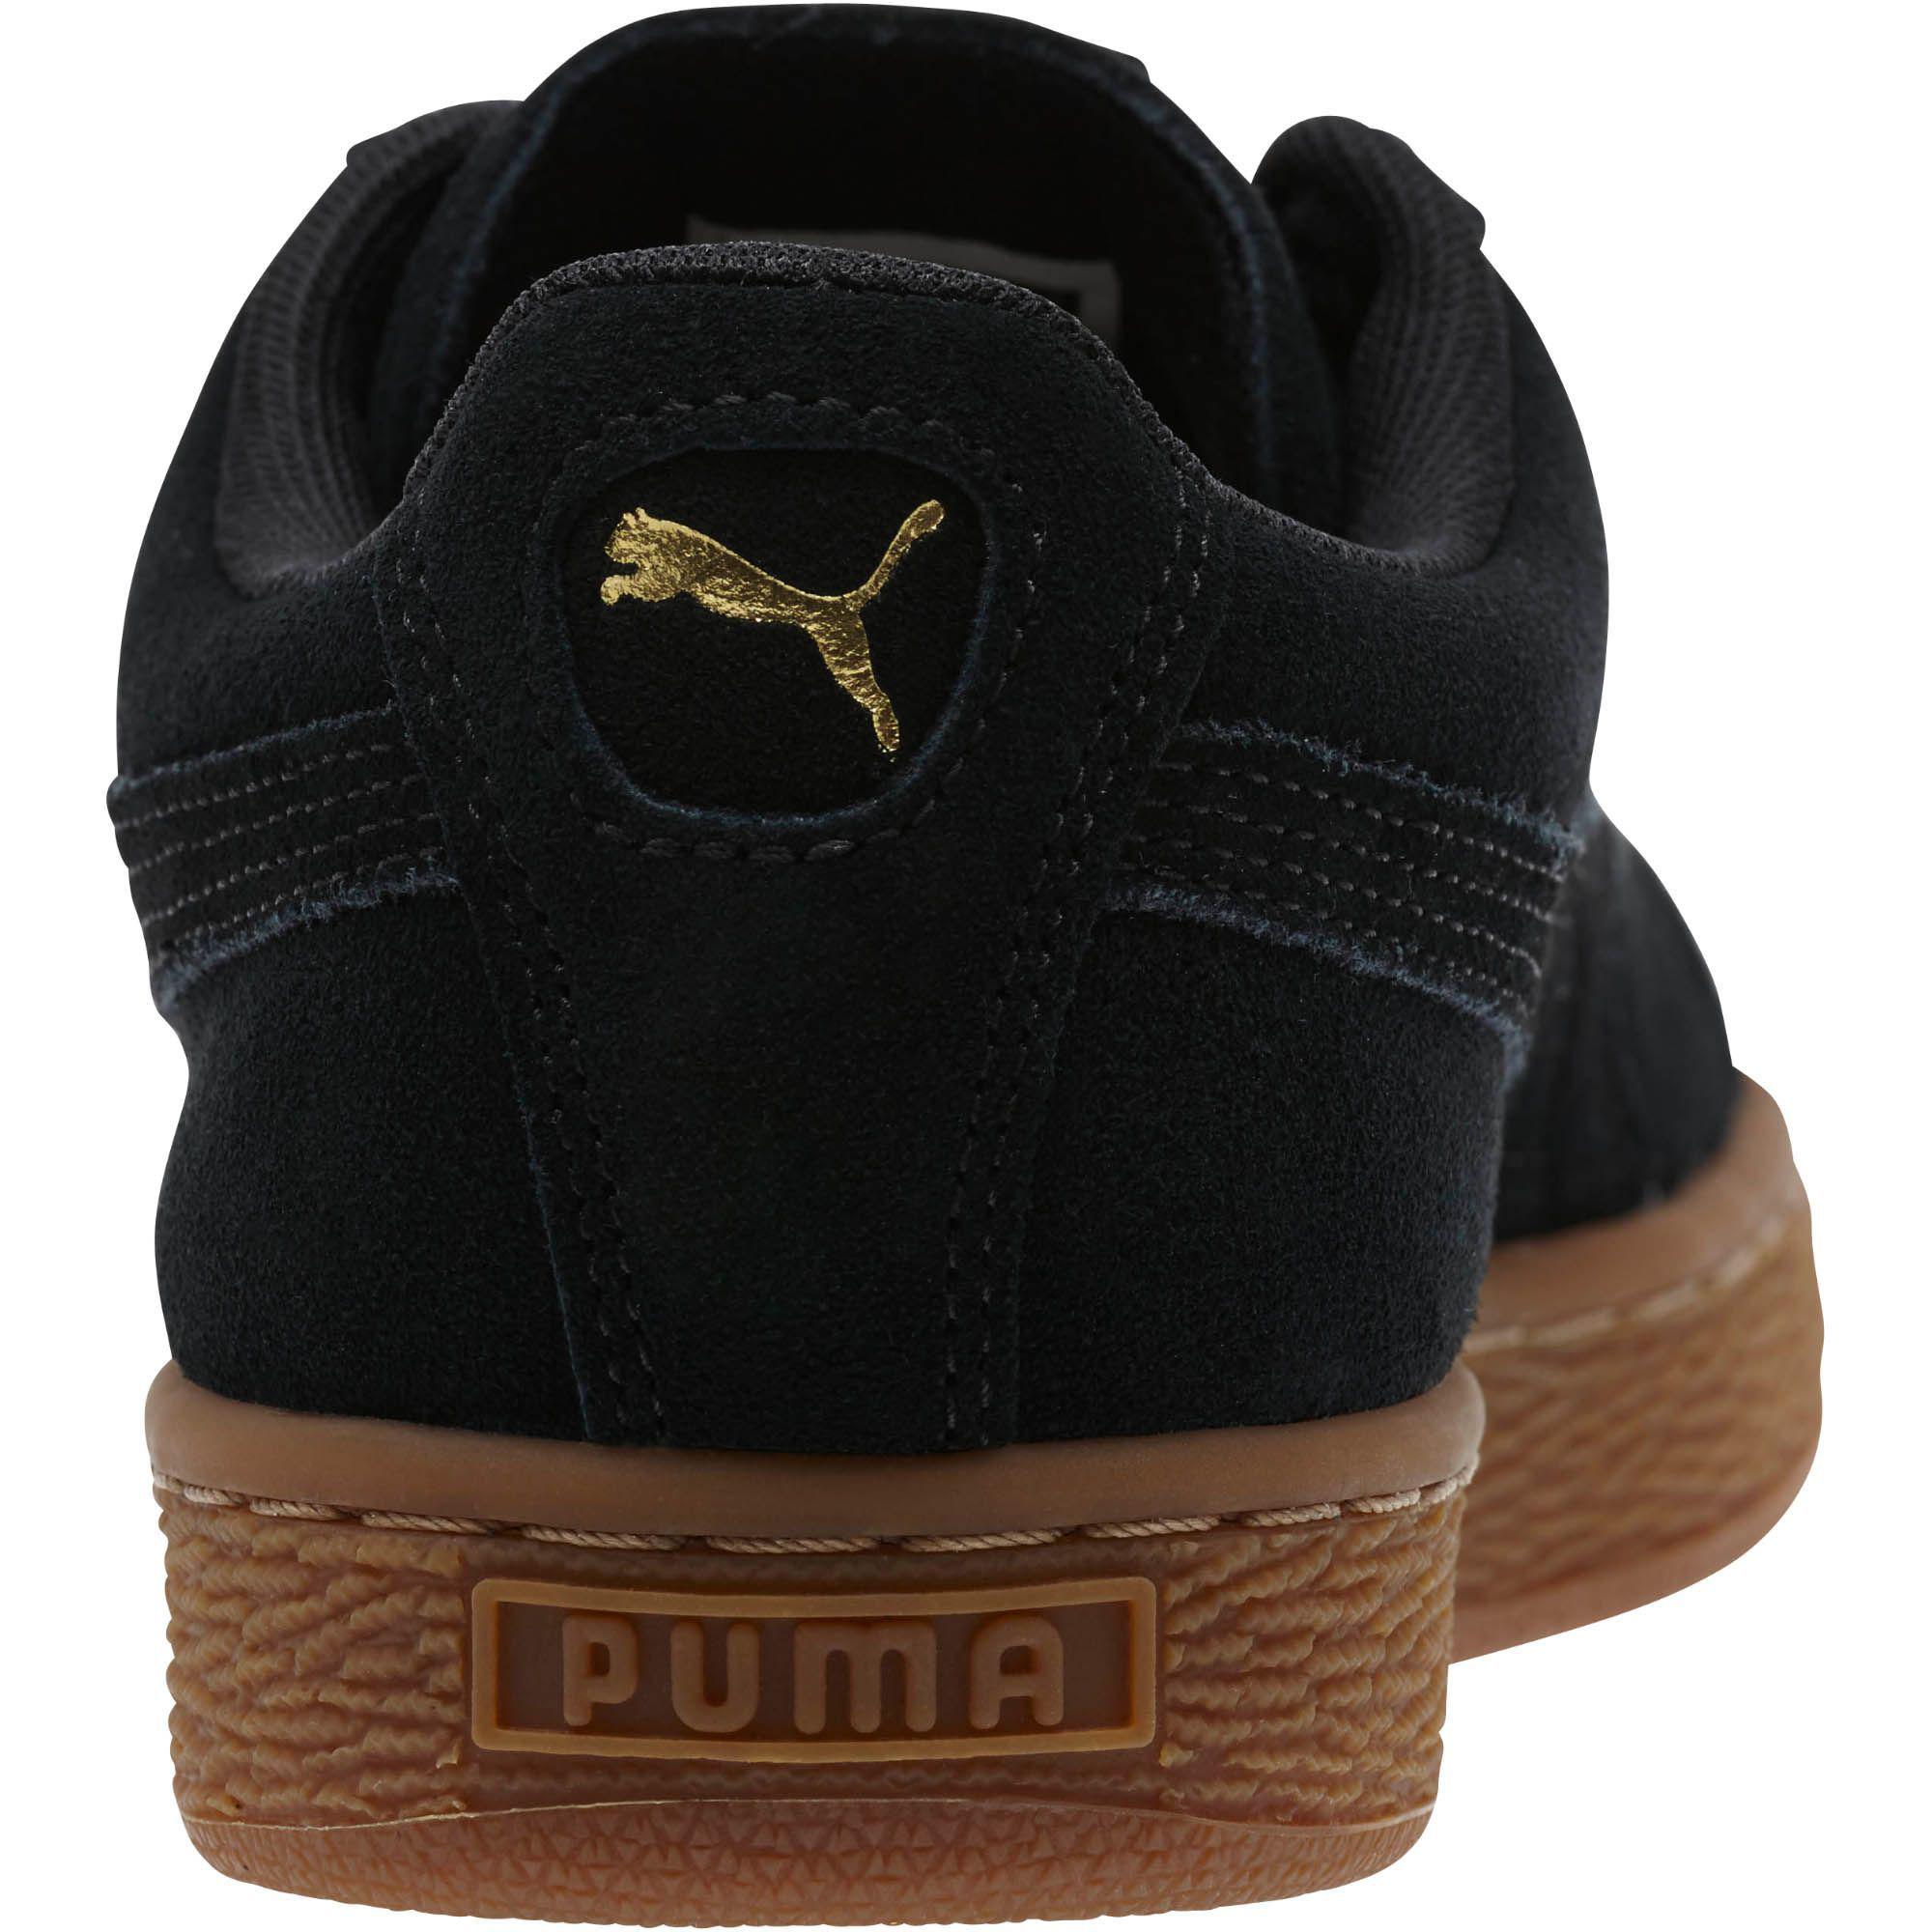 puma suede classic gold women's sneakers